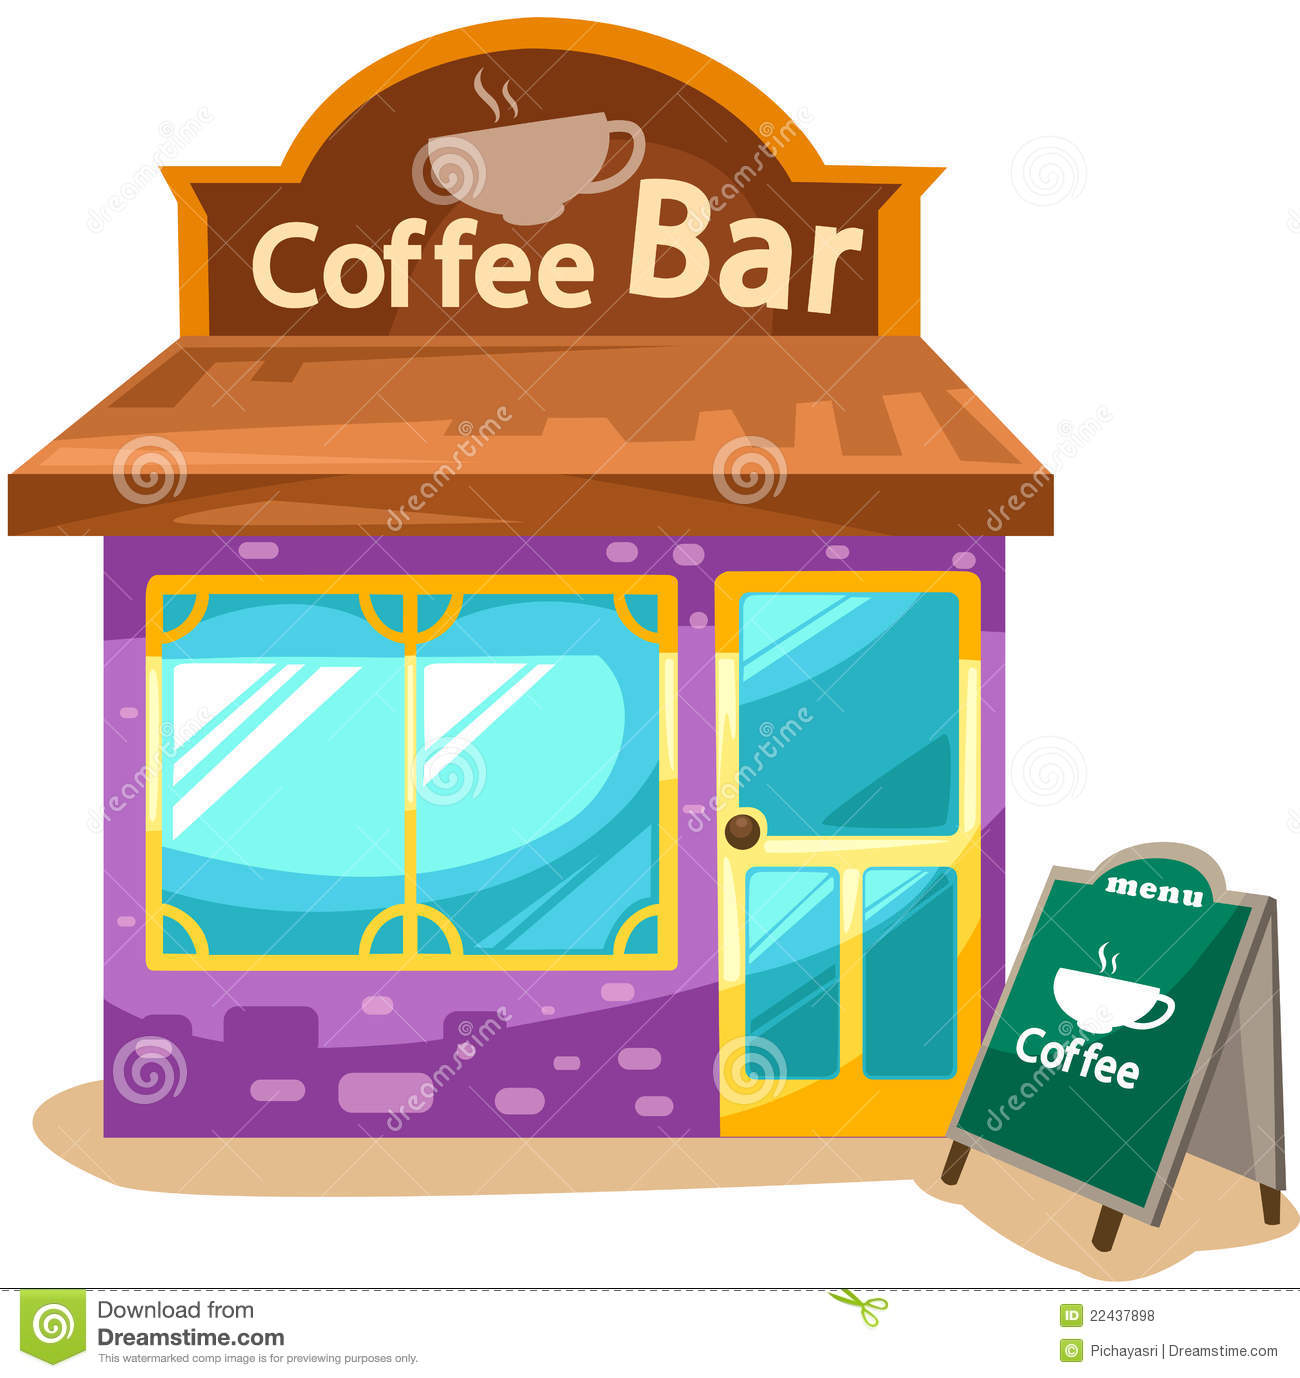 a coffee shop